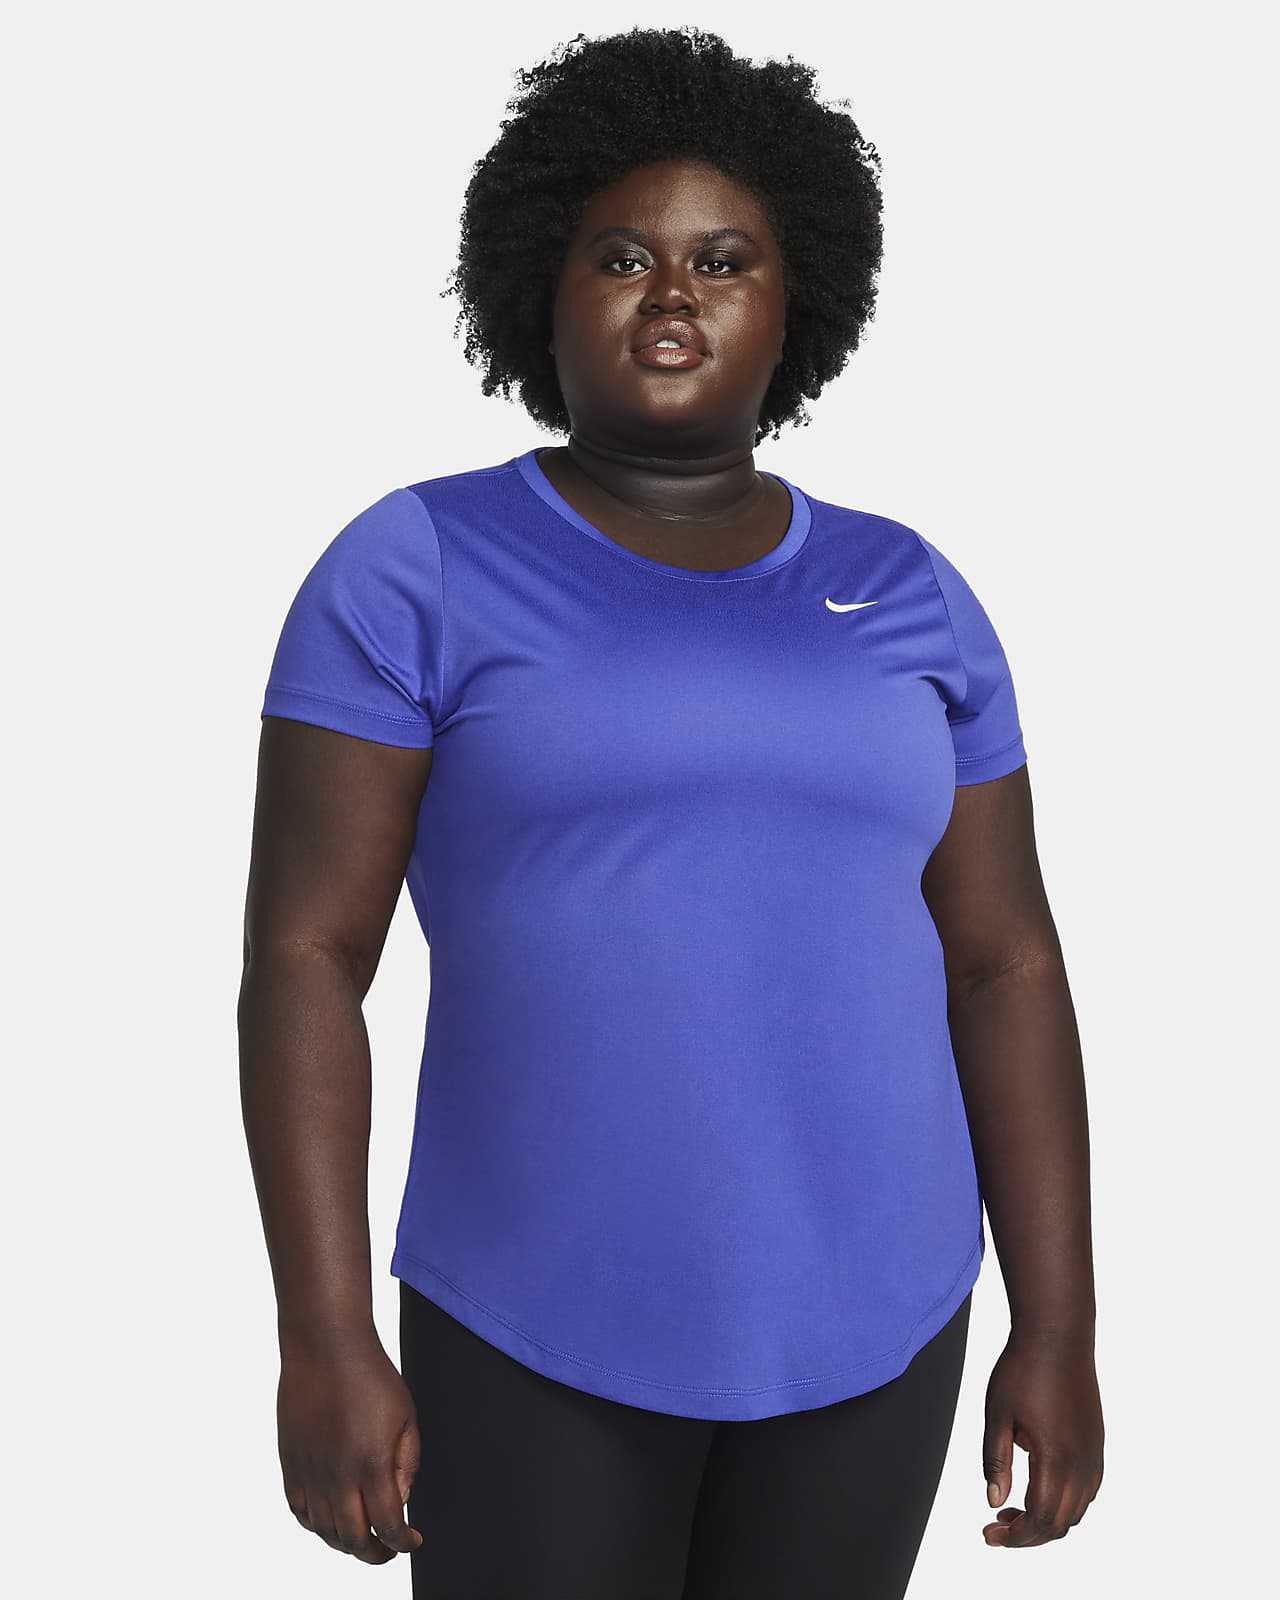 Falde sammen reform Tilkalde Nike Dri-FIT Legend Women's Training T-Shirt (Plus Size). Nike.com